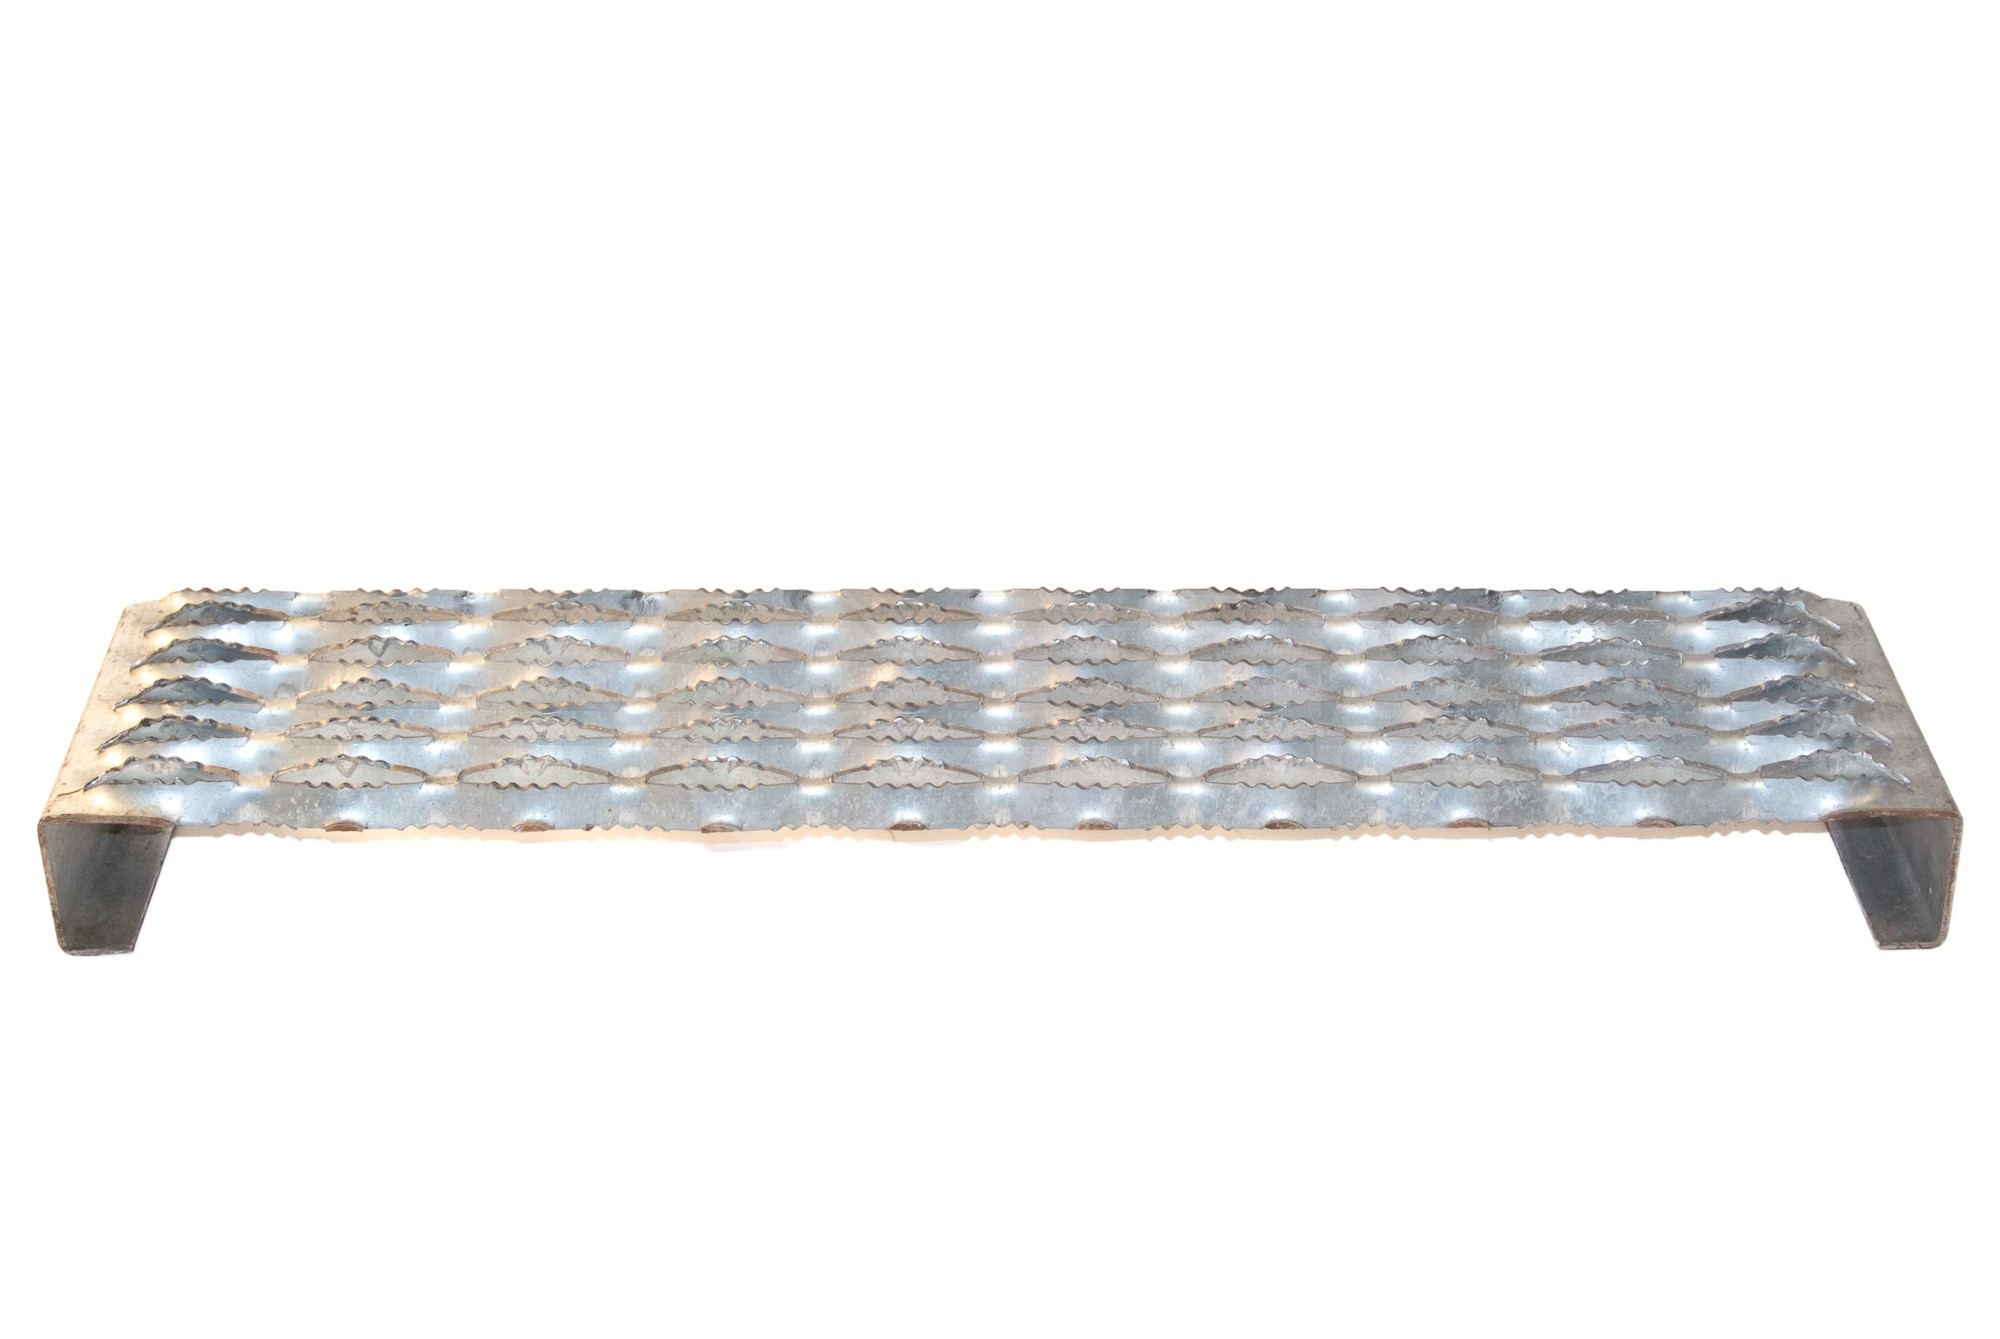 60 Length x 9-1//2 Width x 3 Depth 3243012-60 Grip Strut Channel 12 Gauge Galvanized Steel 4-Diamond Plank Safety Grating